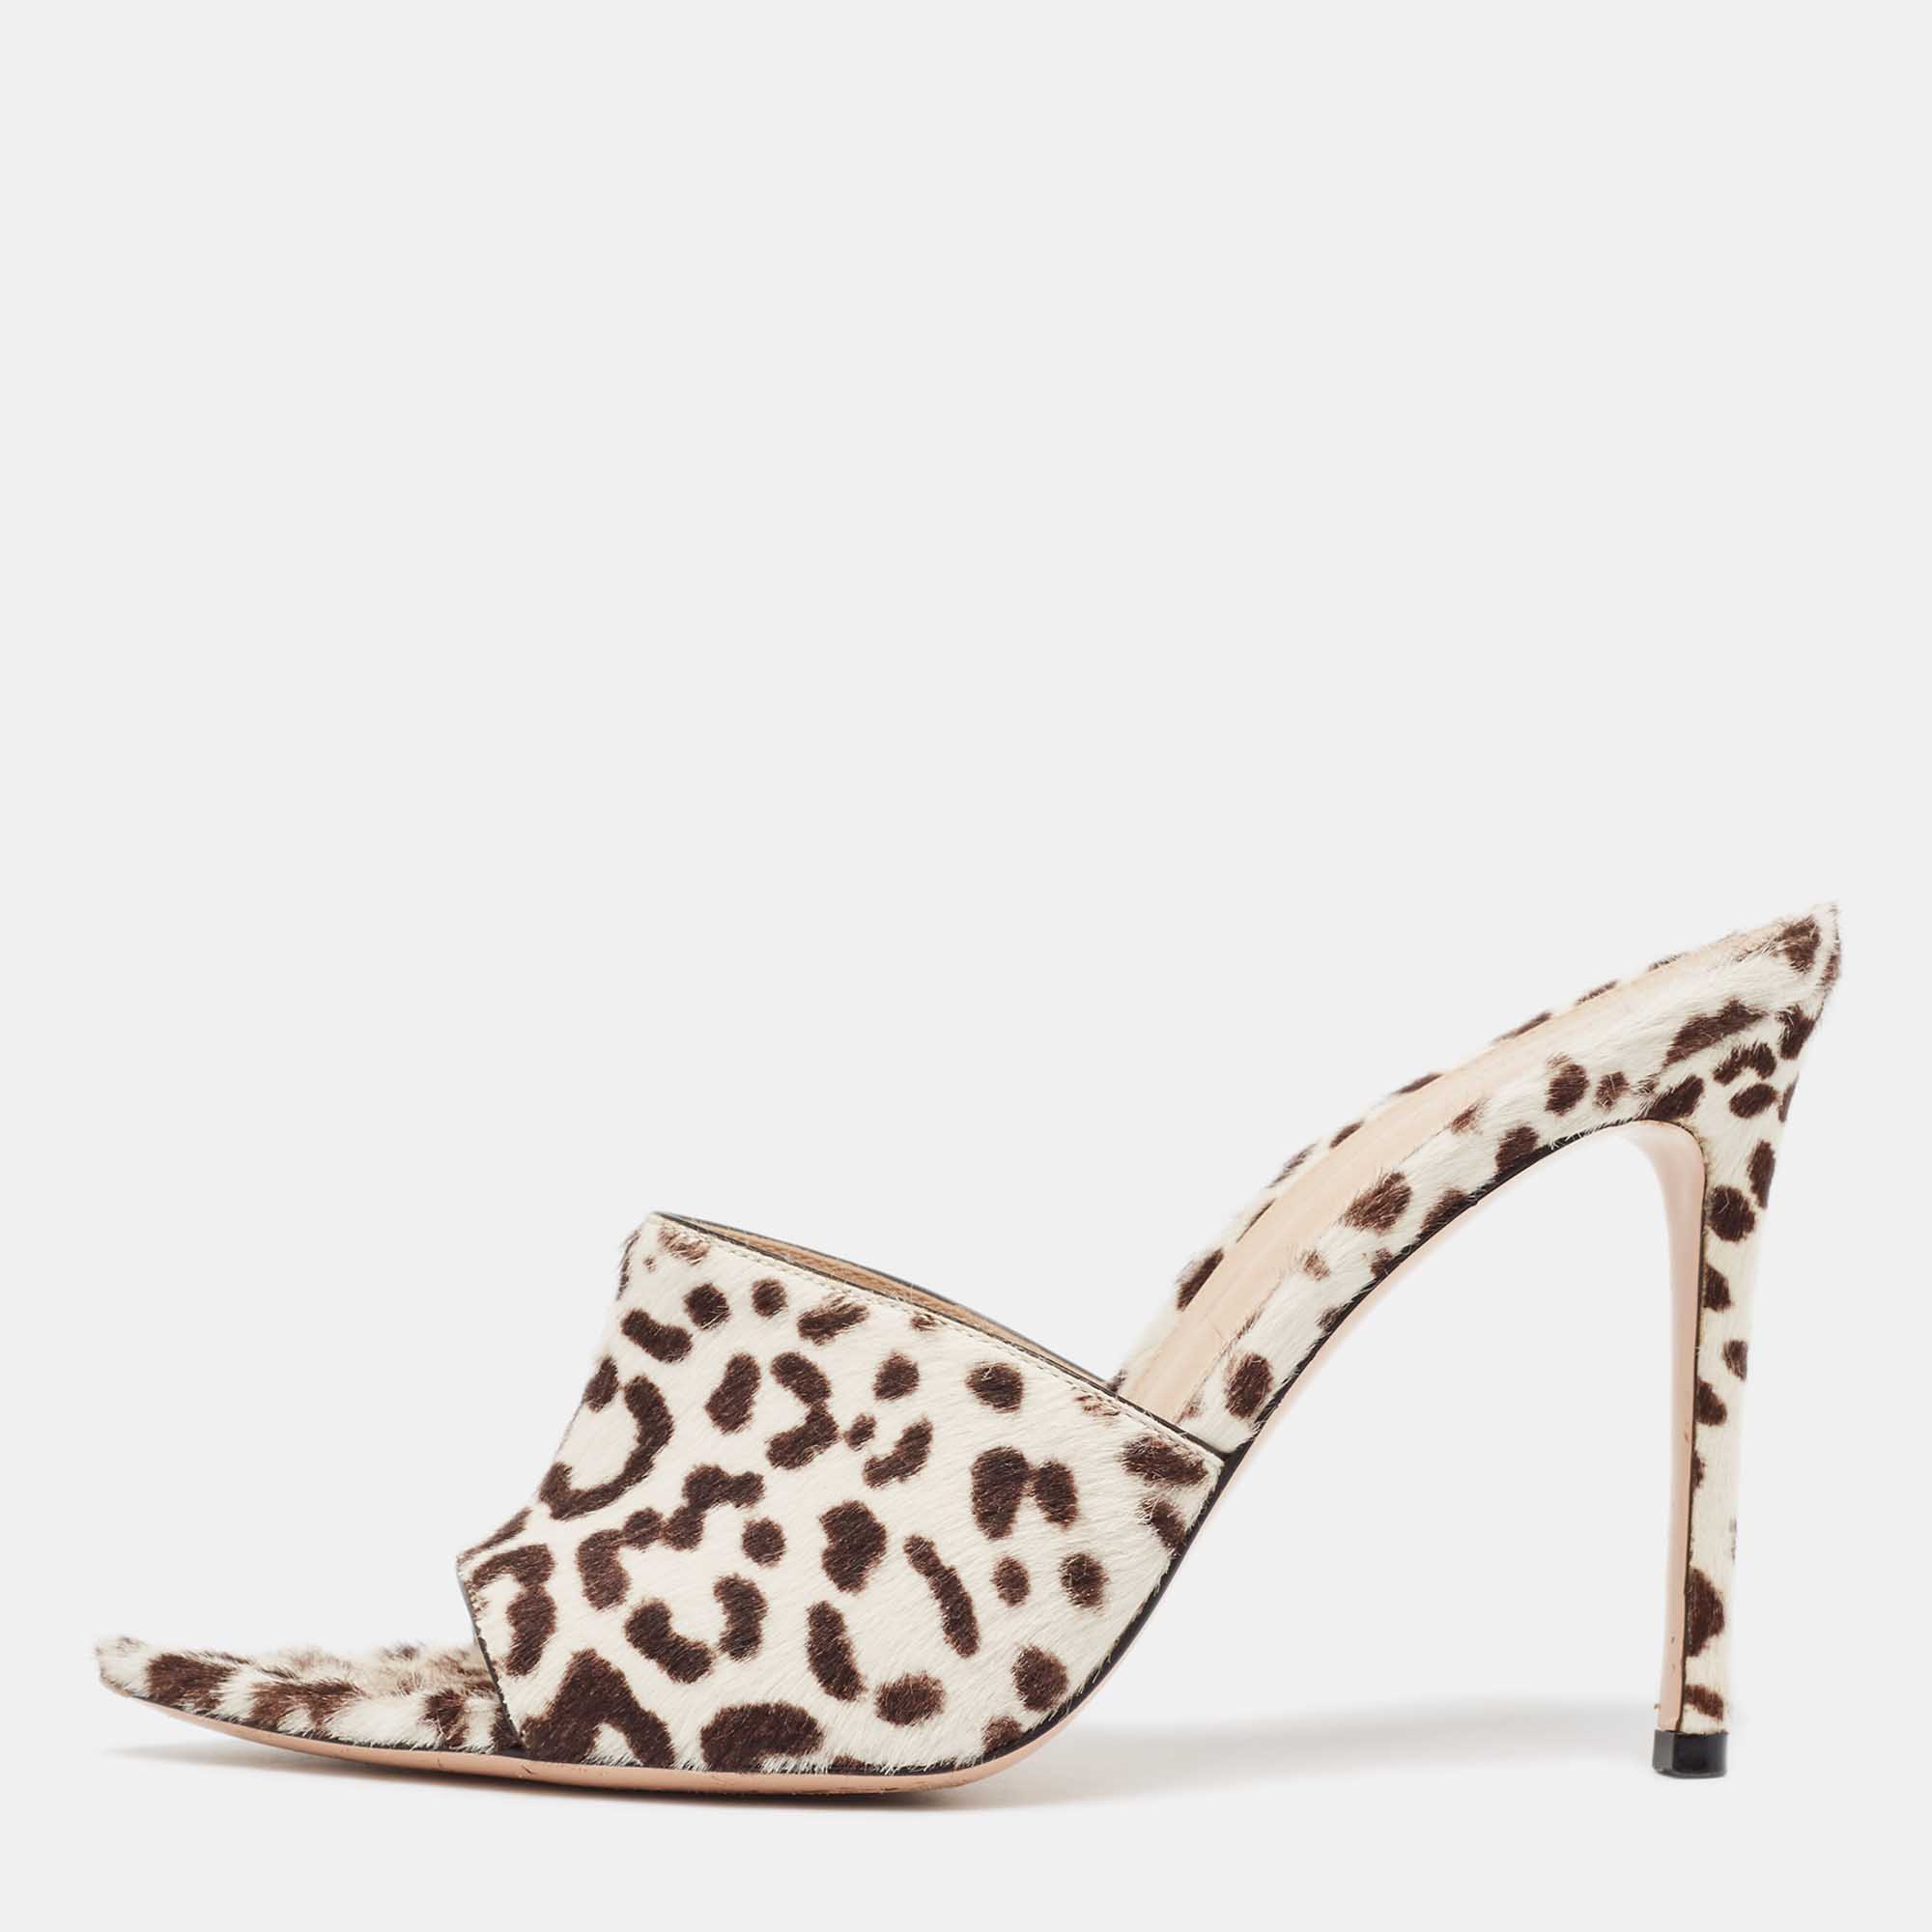 Gianvito rossi brown/white leopard print calfhair elle slide sandals size 38.5